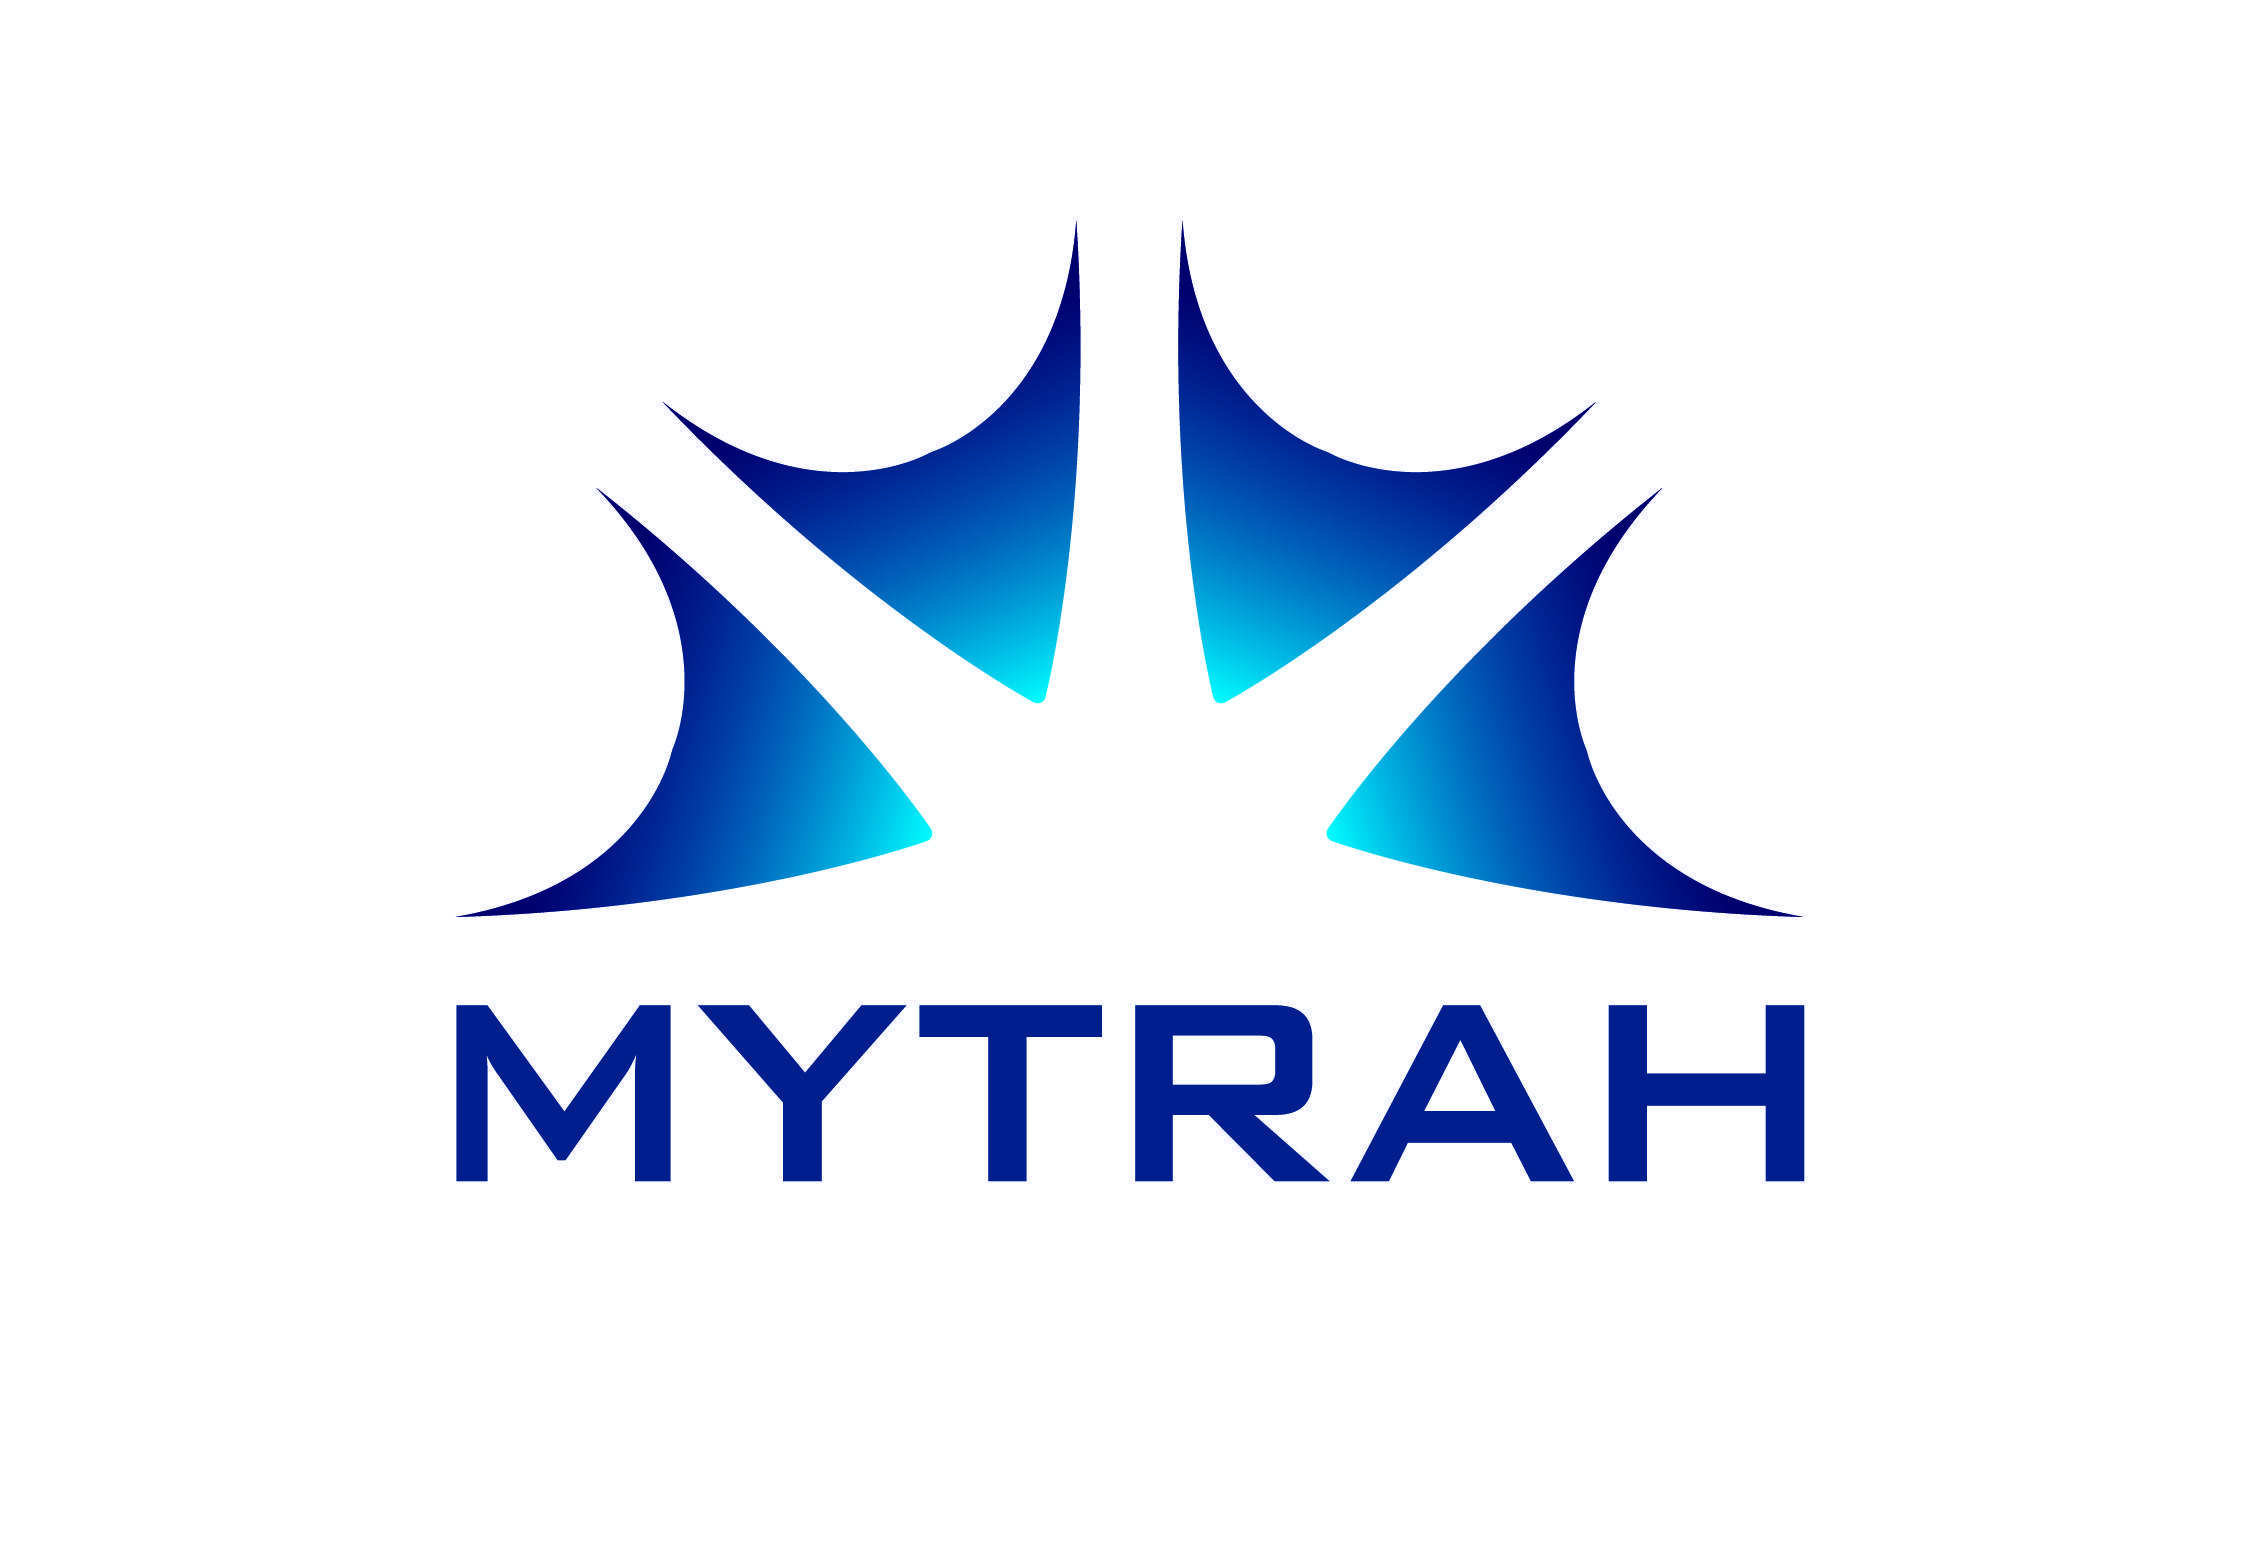 1 Energy Logo - File:Mytrah logo.jpg